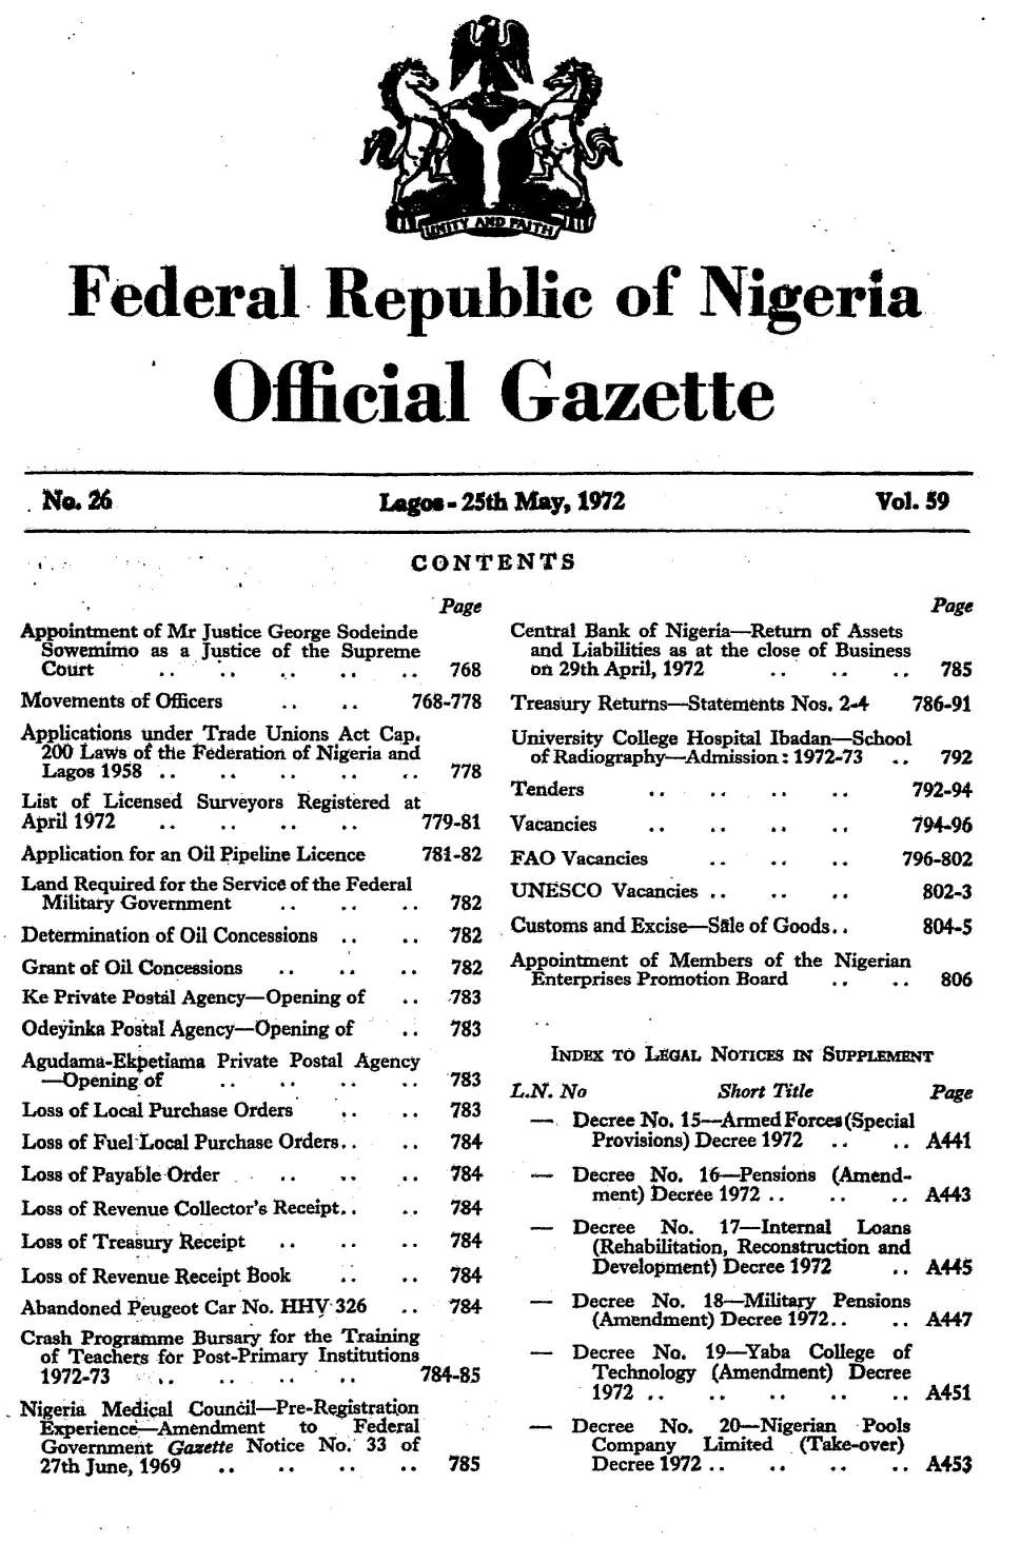 Federal. Republic of Nigeria Official Gazette